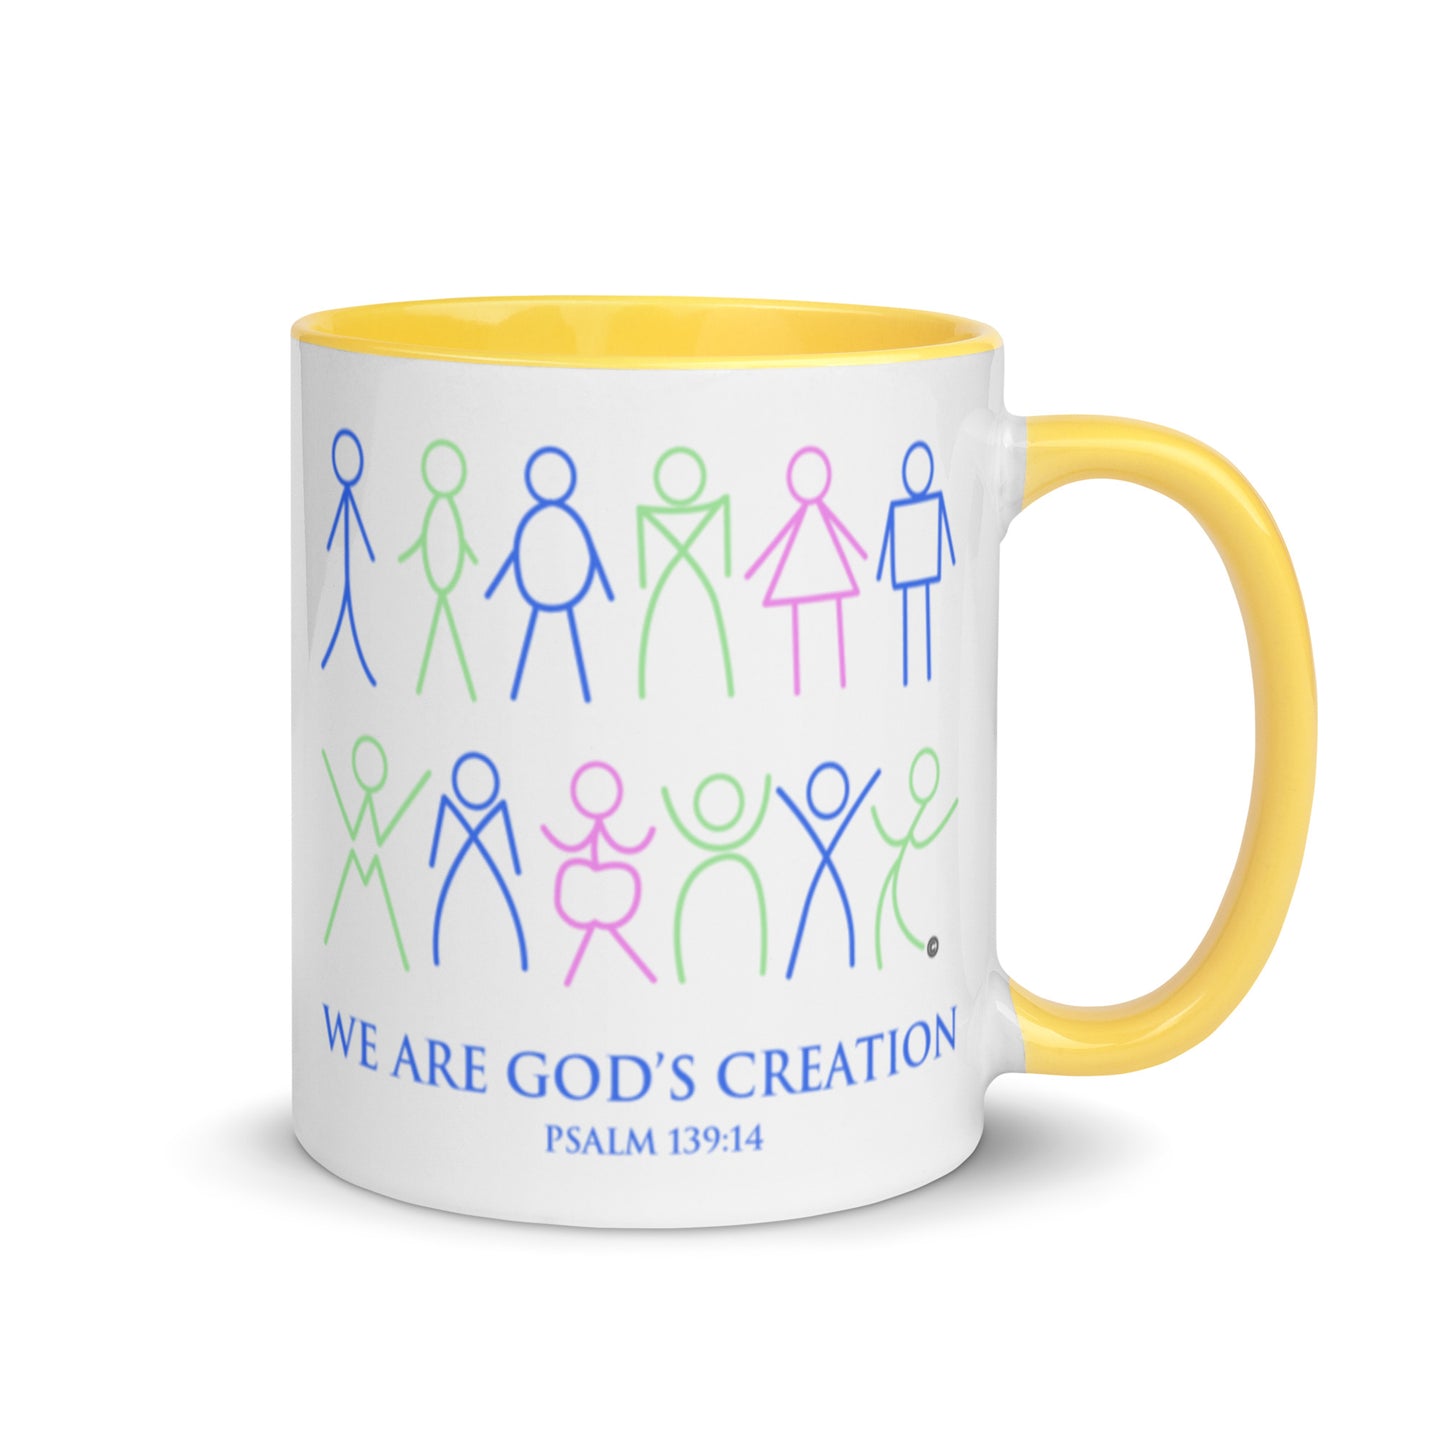 We Are God's Creation Mug with Color Inside